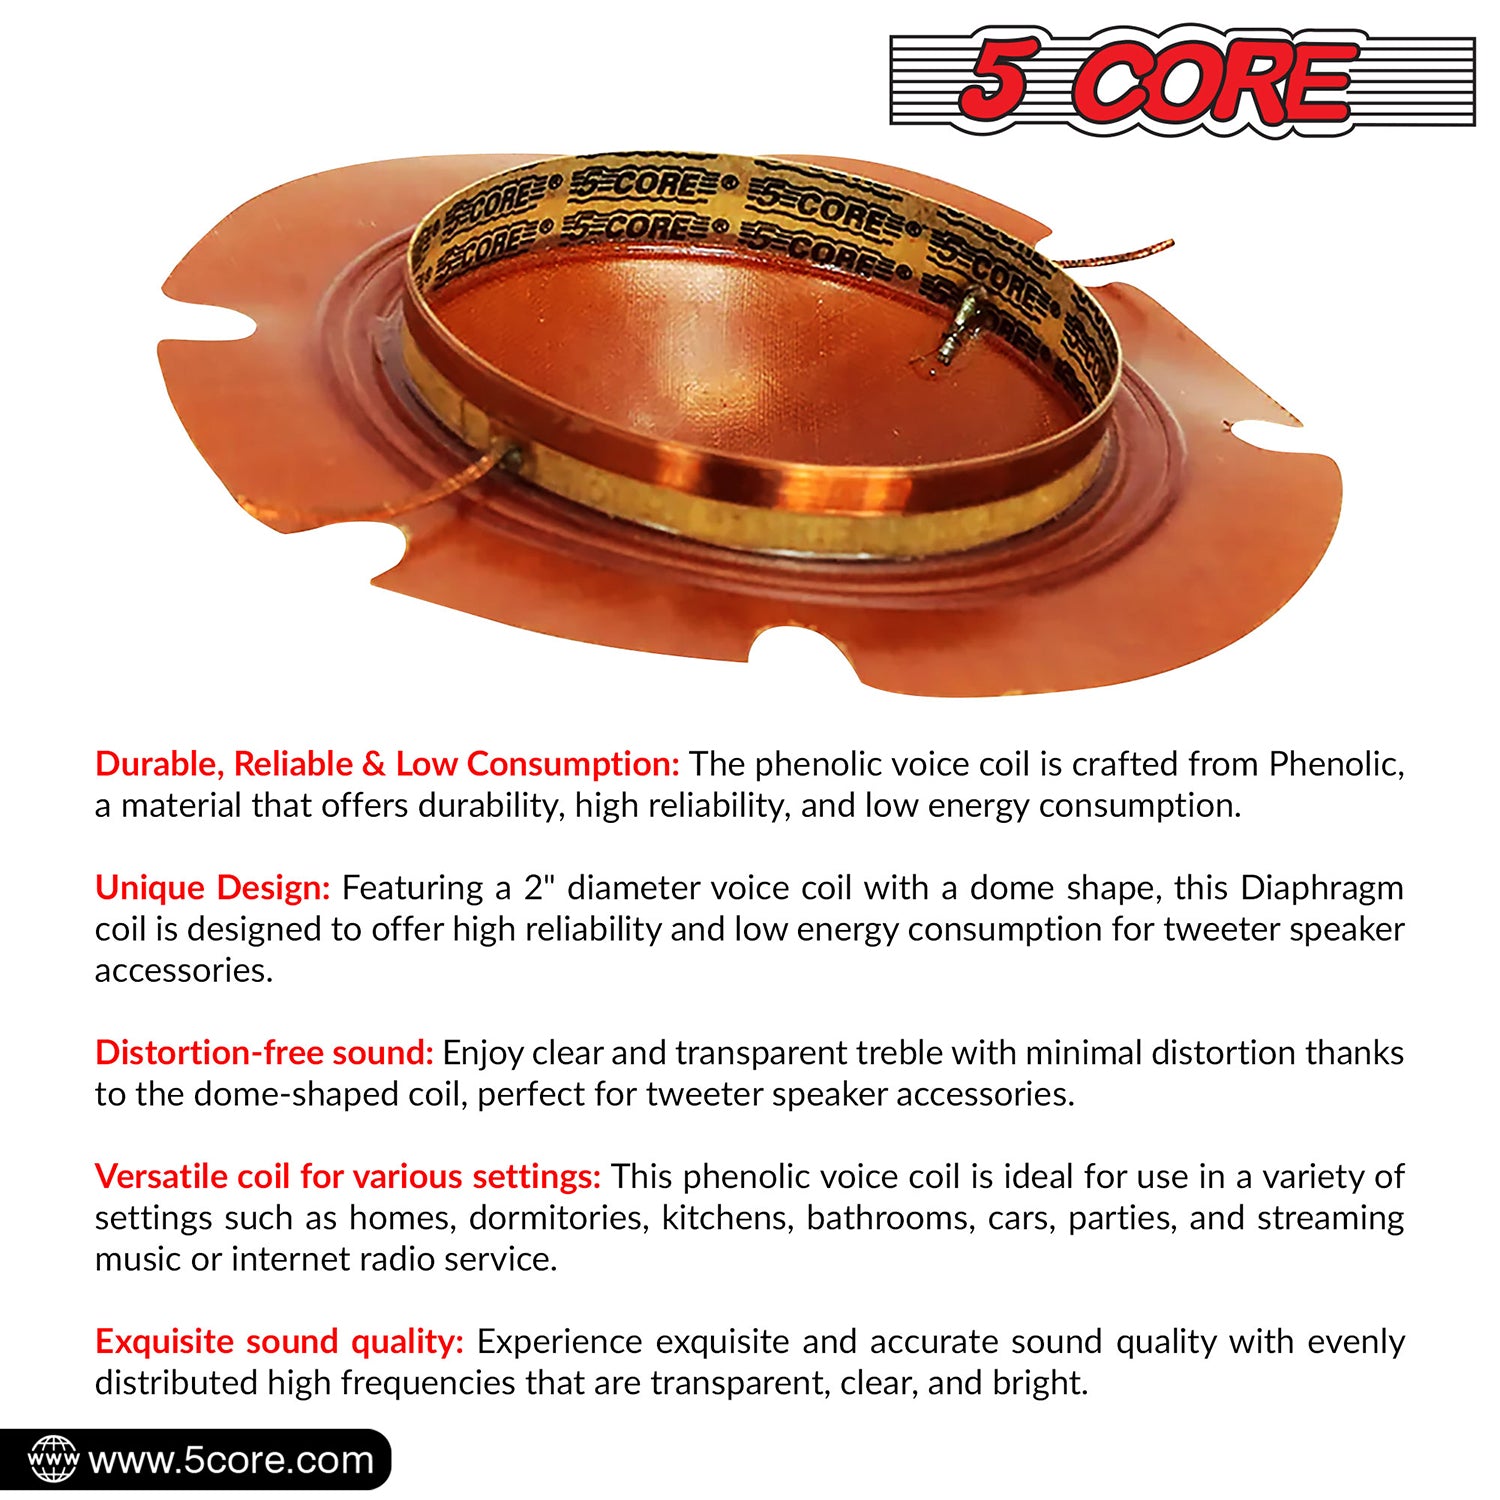 5 Core Voice Coil Diaphragm • Phenolic 2" Voice Coils • for Compression Horn Driver